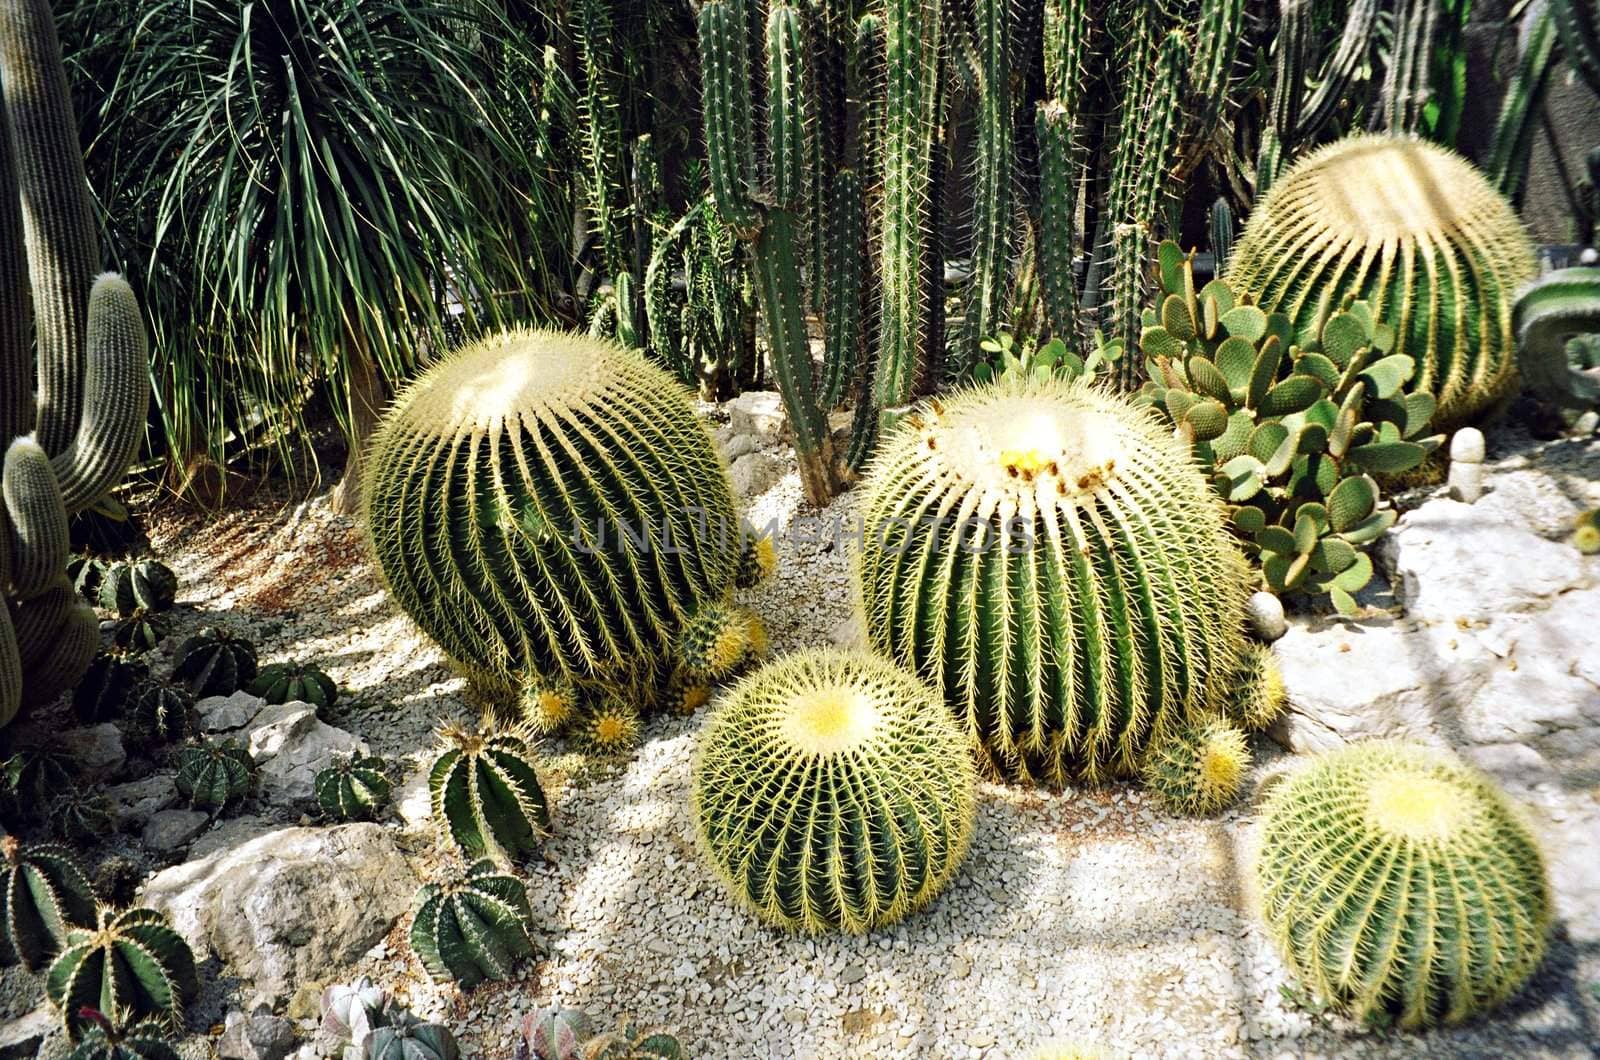 Big round cactus in botanical garden